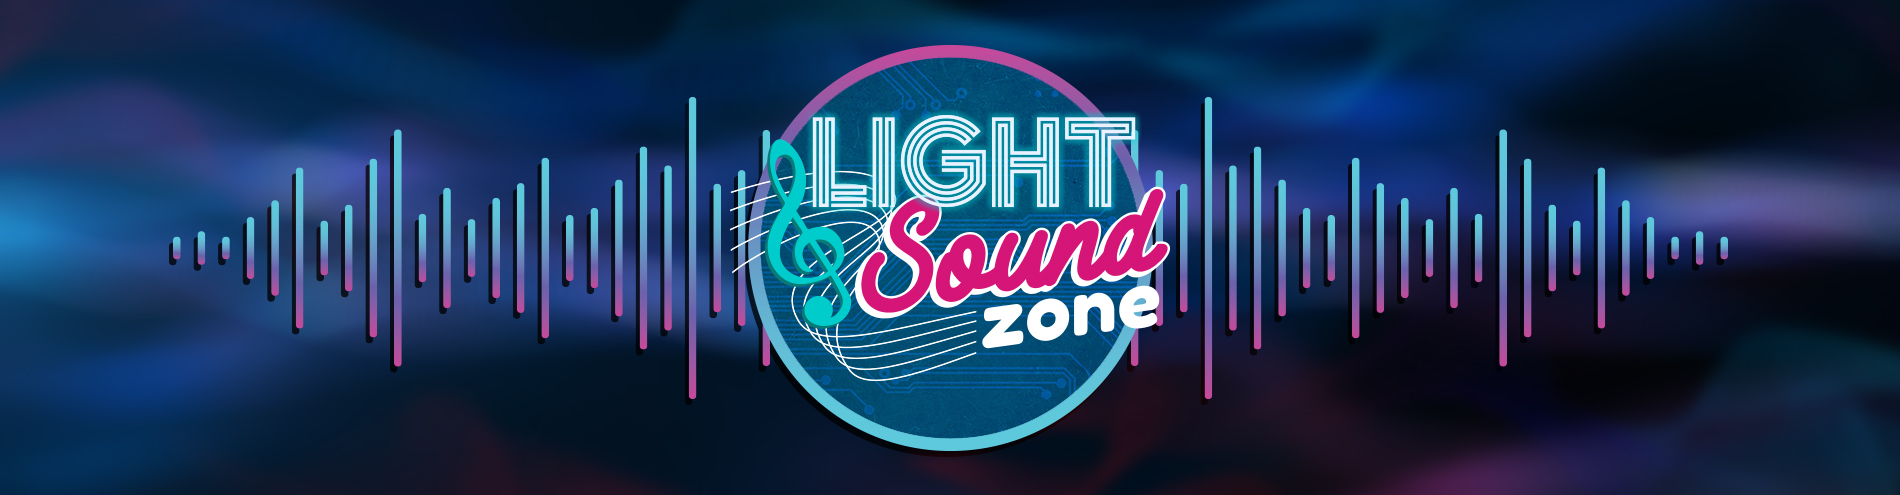 Light And Sound Zone Header